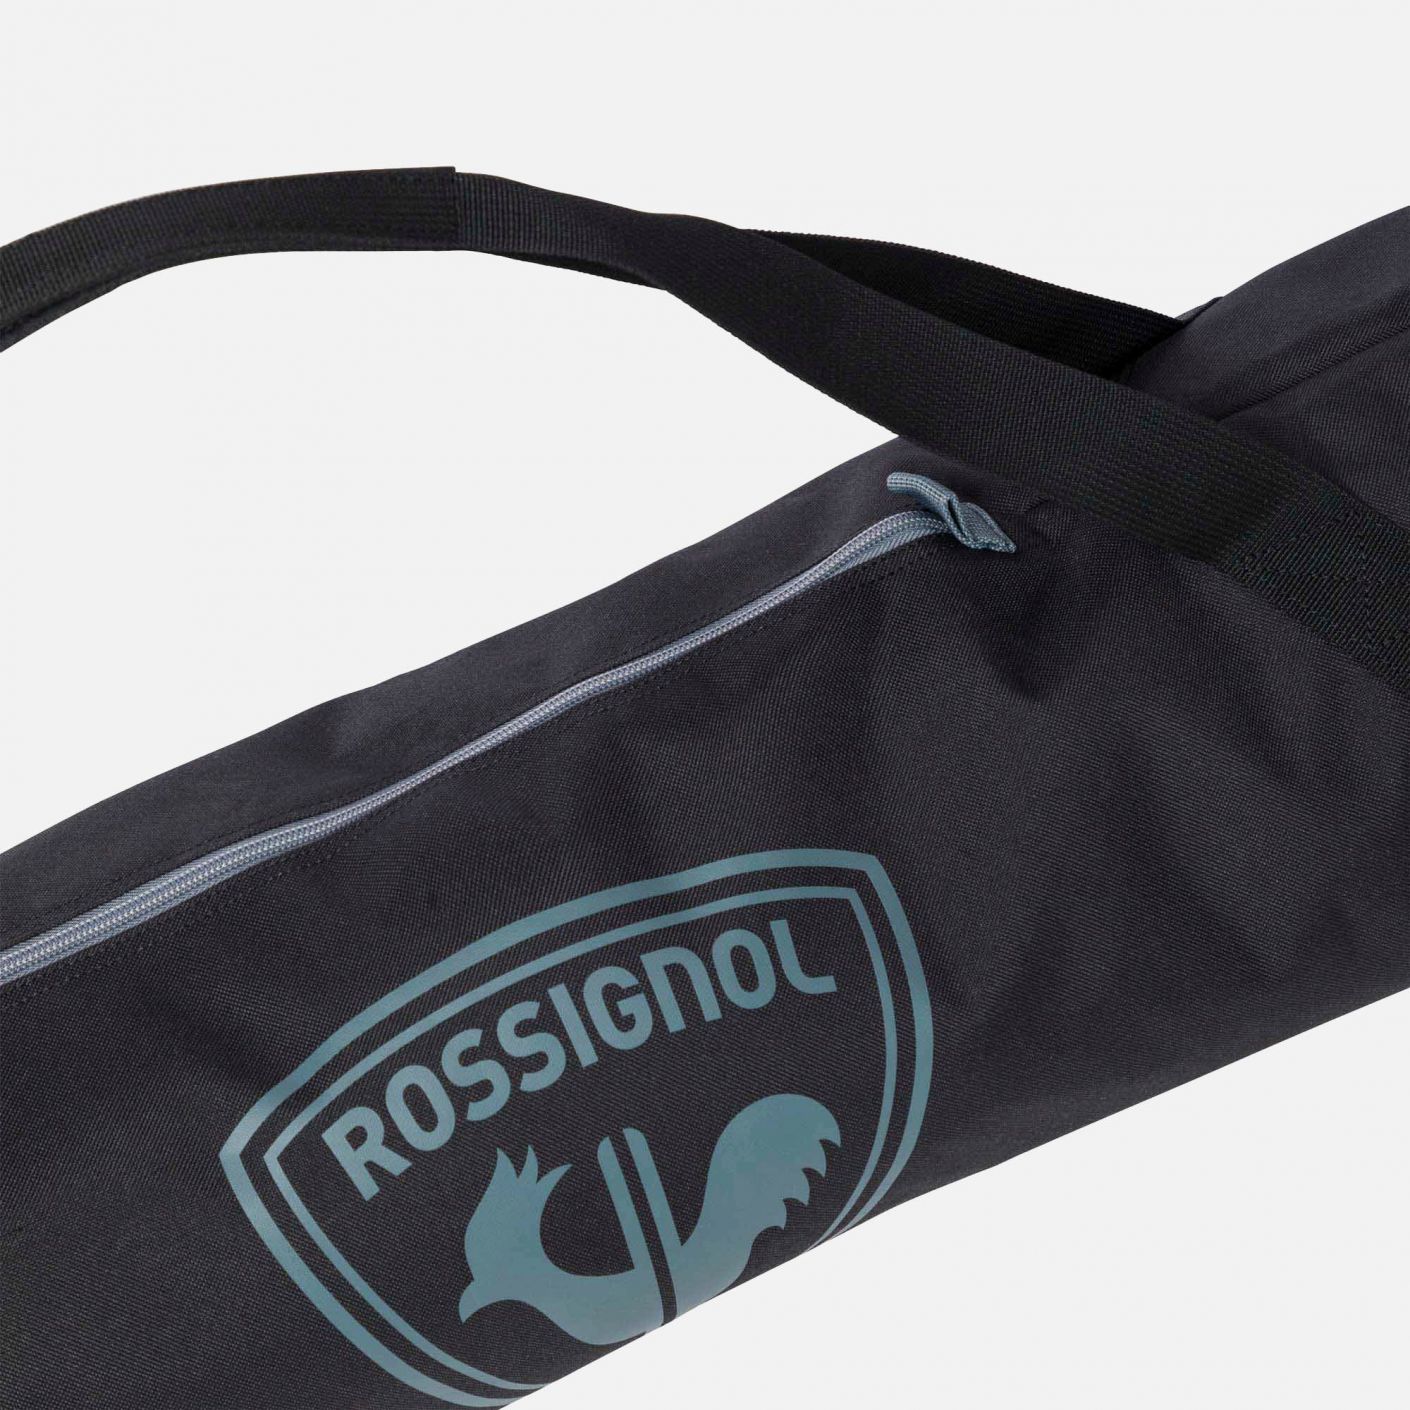 Rossignol Bag Basic Ski 185cm